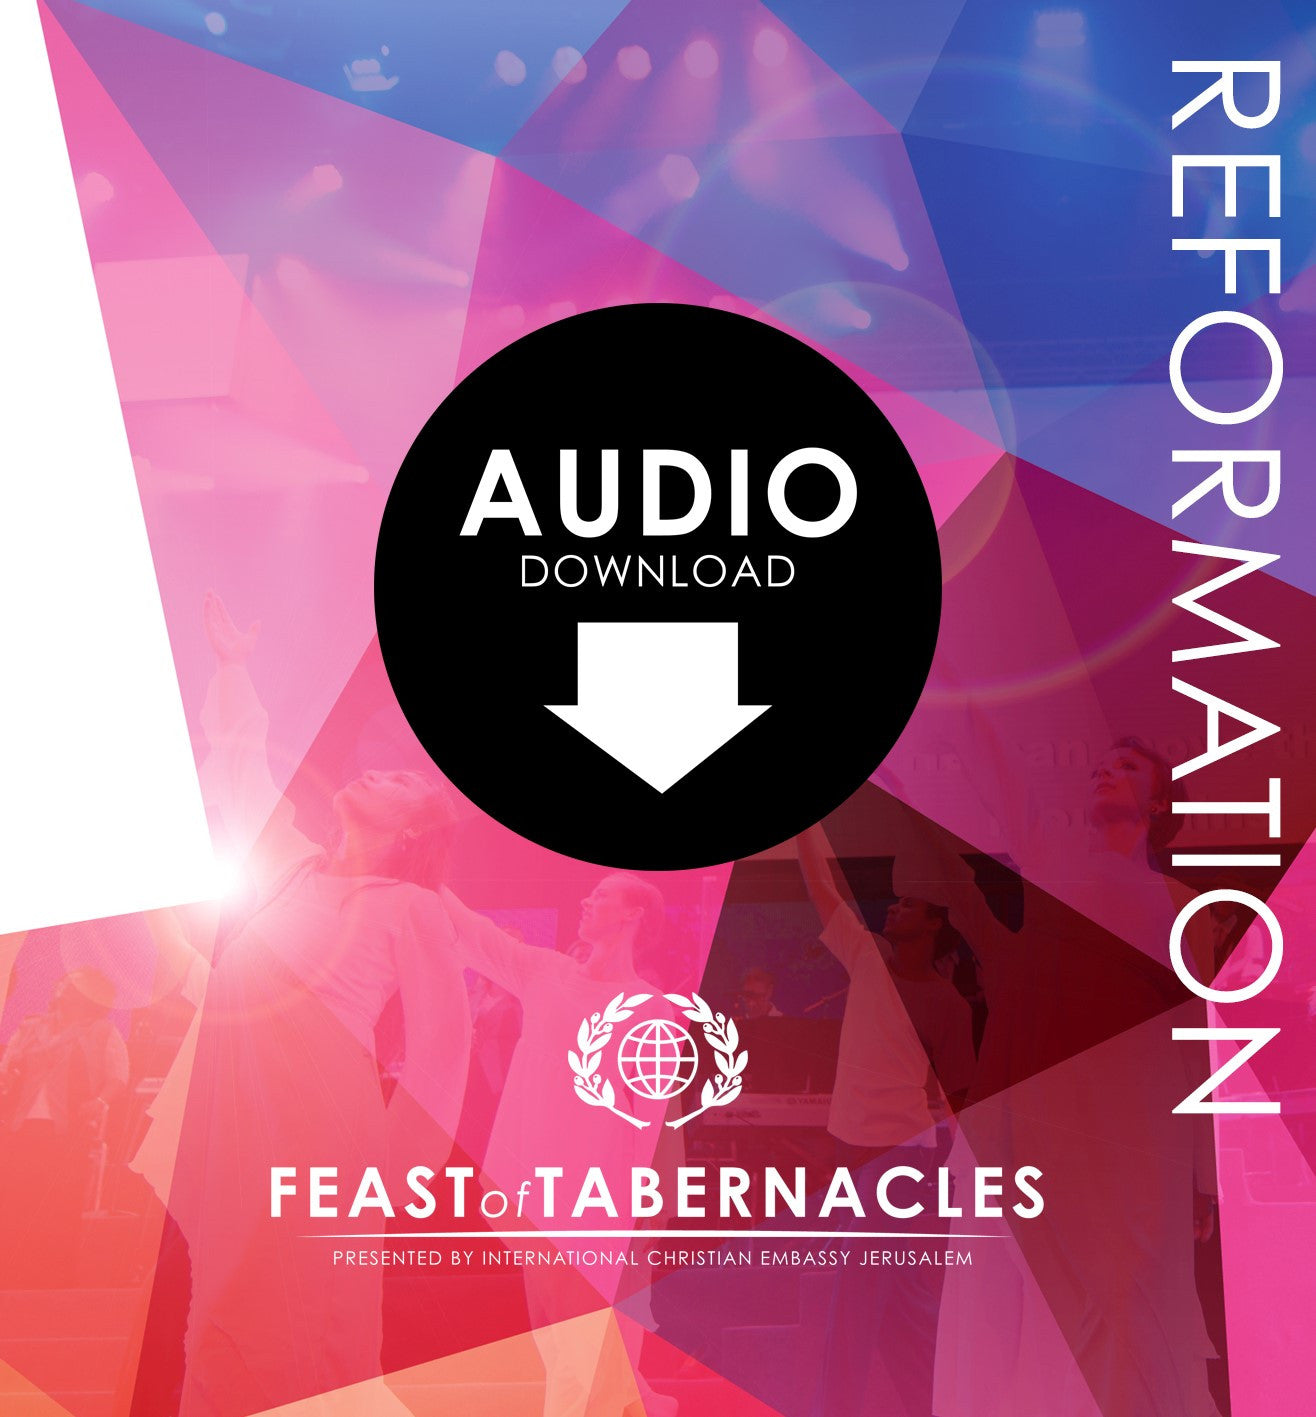 2015 Reformation - John Francis - seminar Evening Session  Audio Download